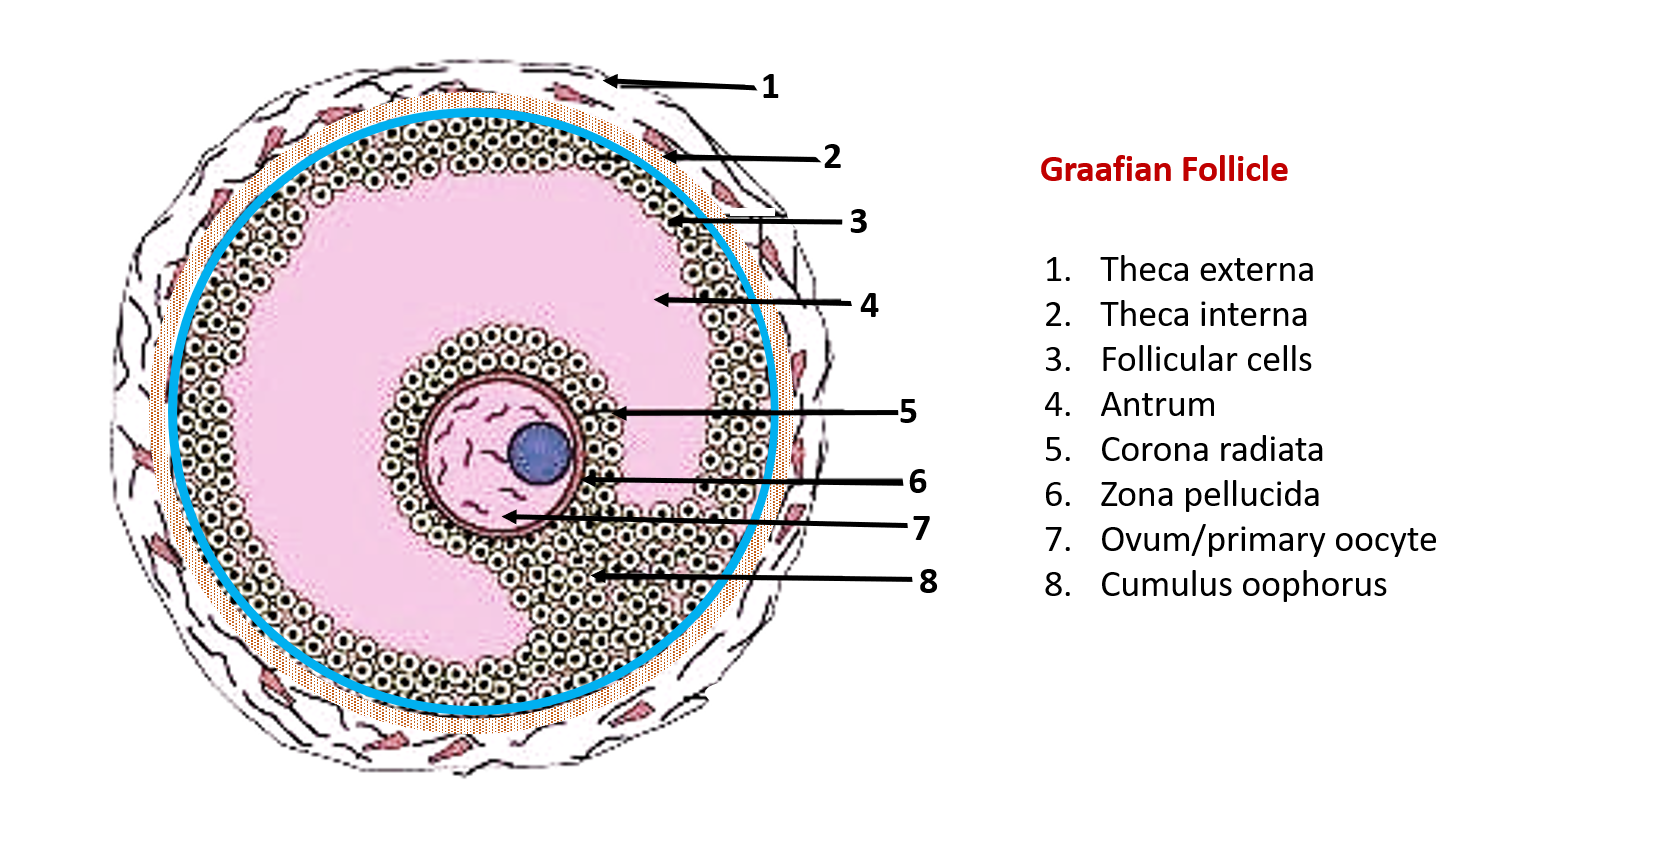  Structure of Graafian follicle